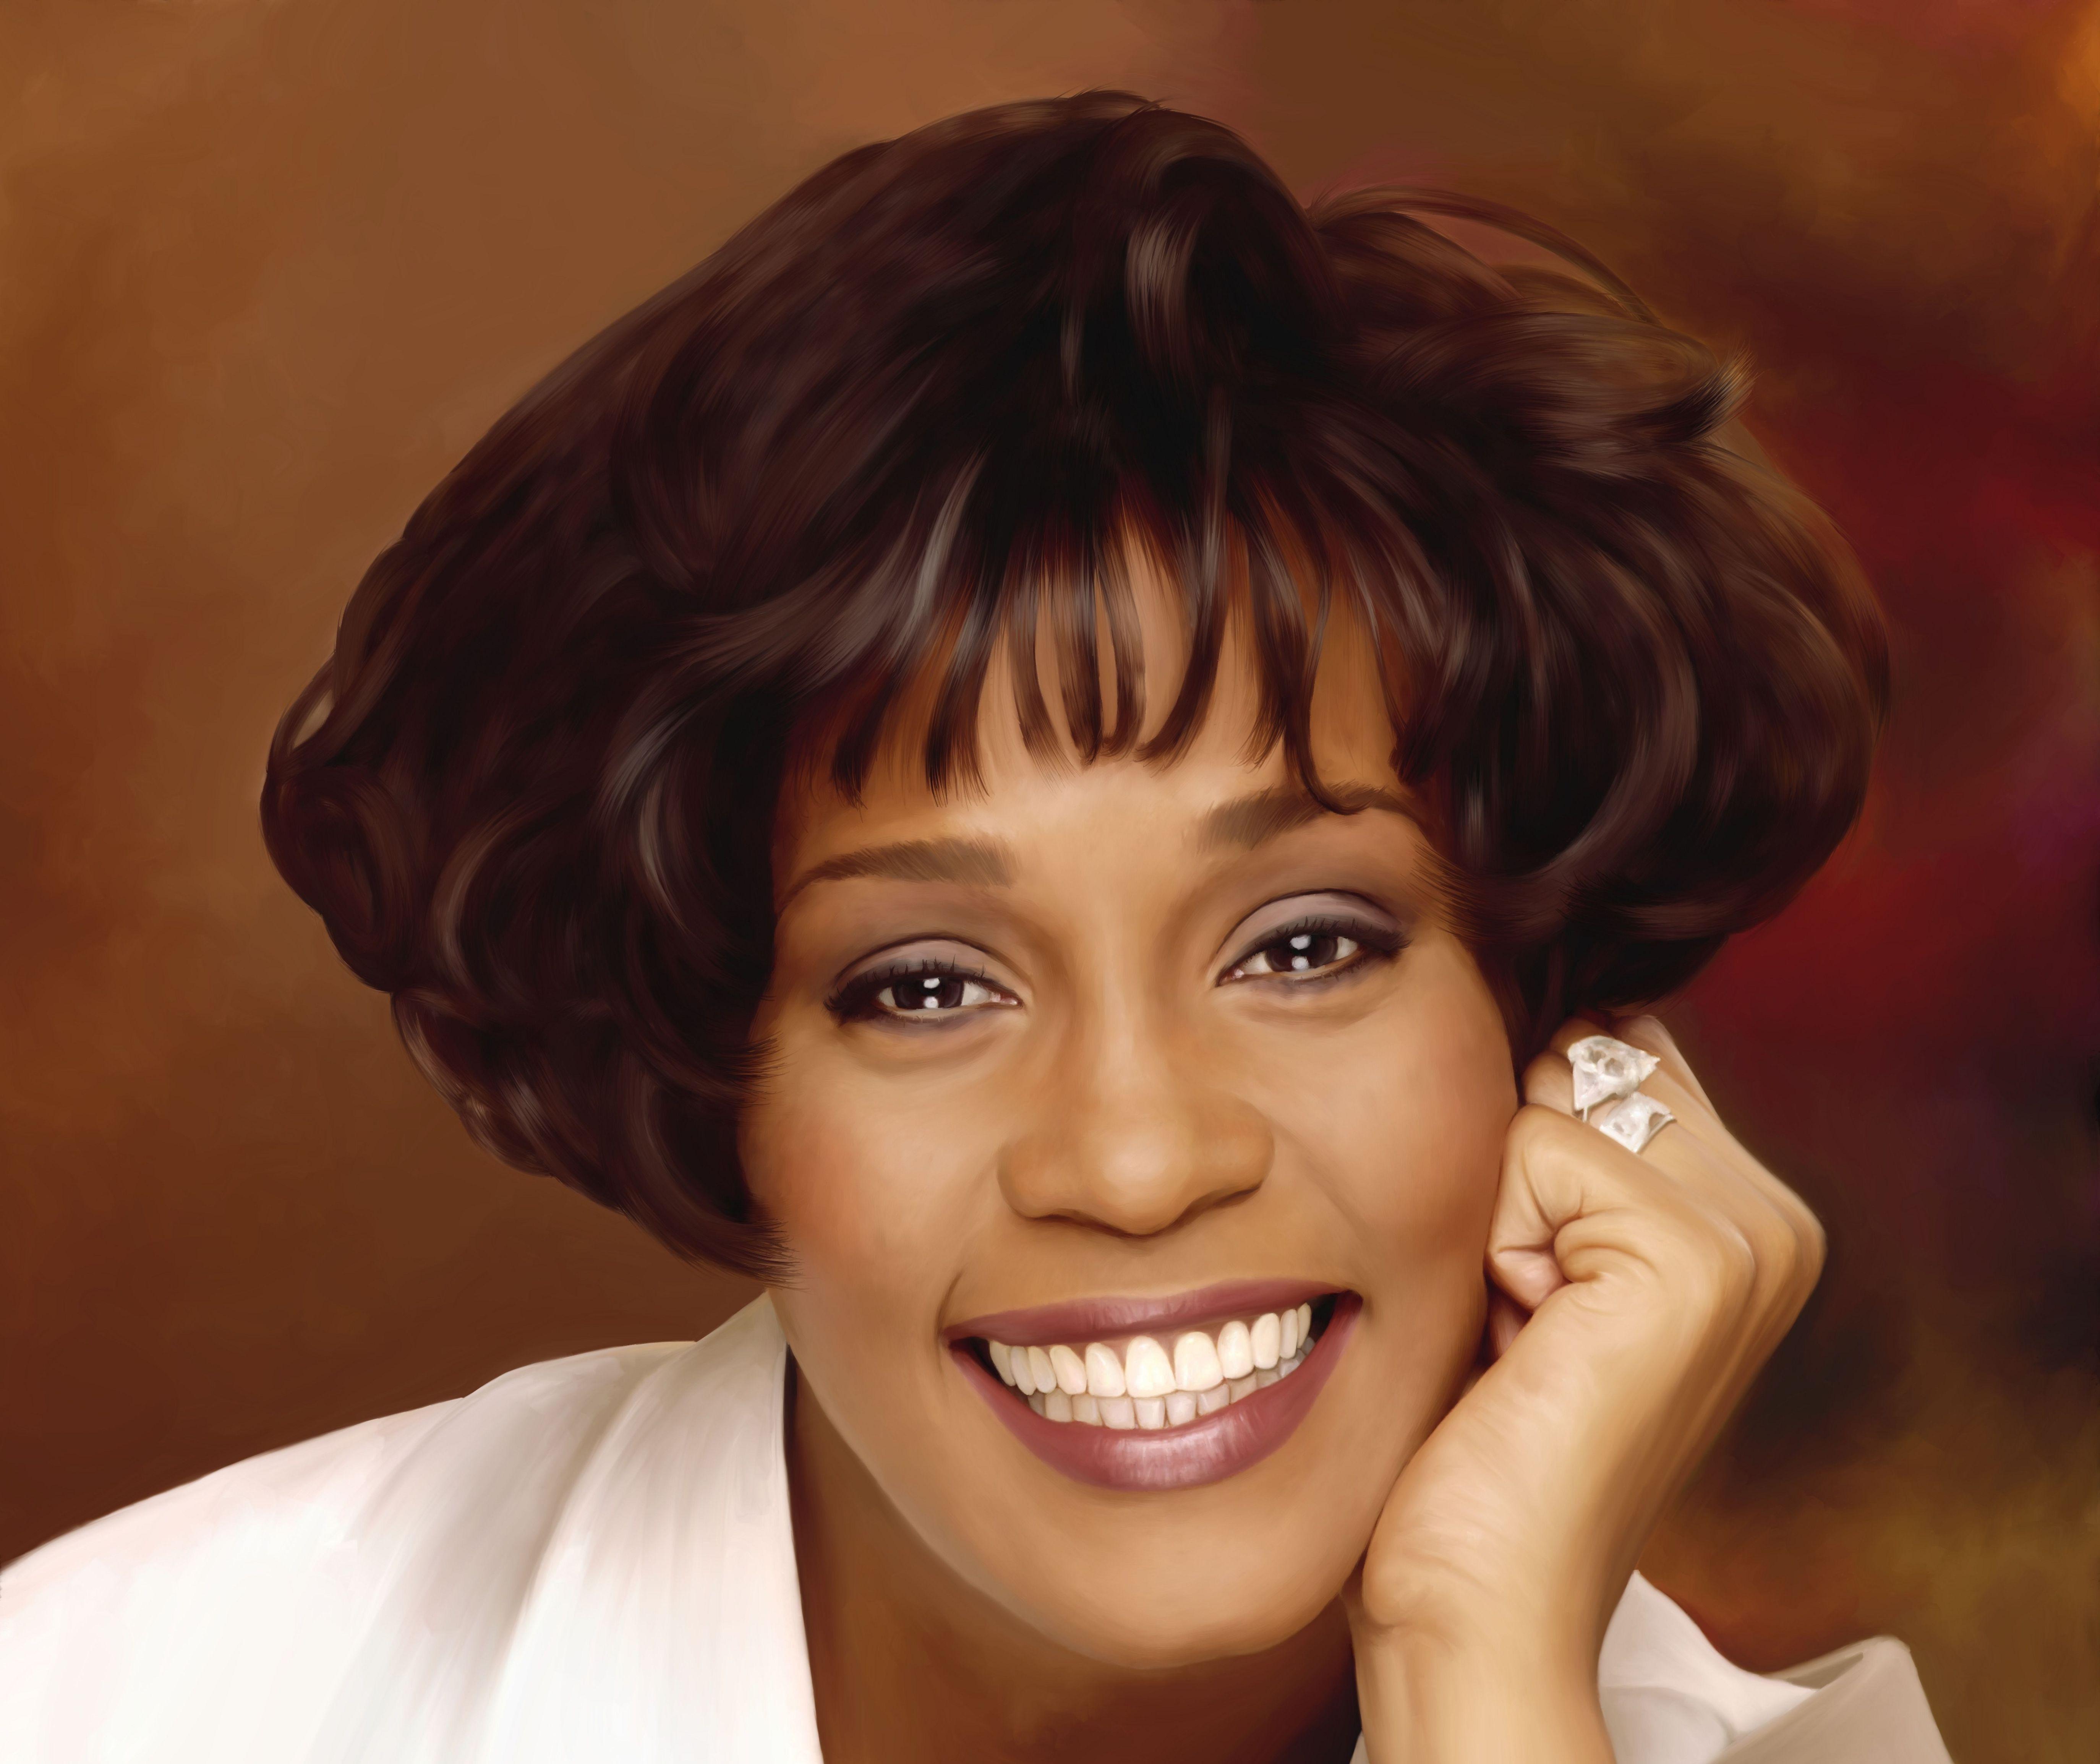 Whitney Houston Wallpaper Image Photo Picture Background